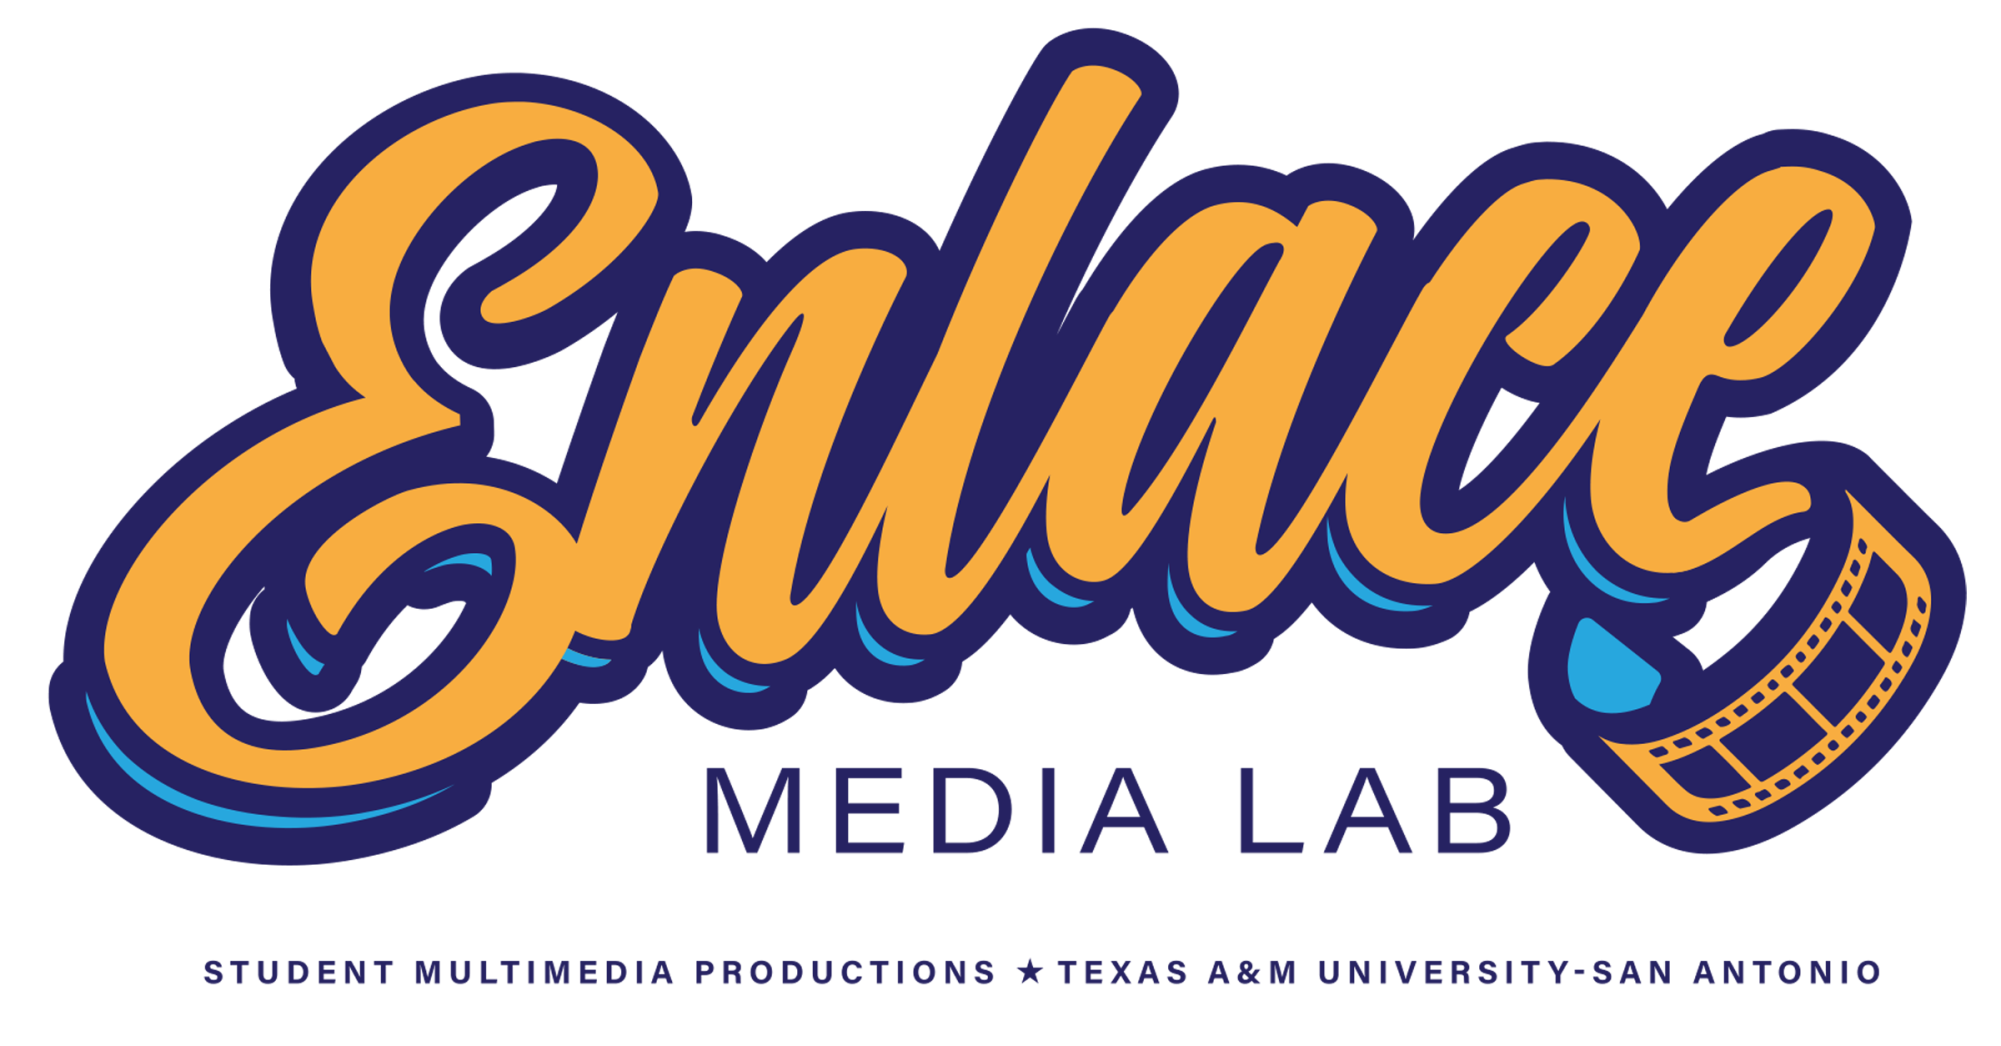 Student Multimedia Productions at Texas A&M University-San Antonio